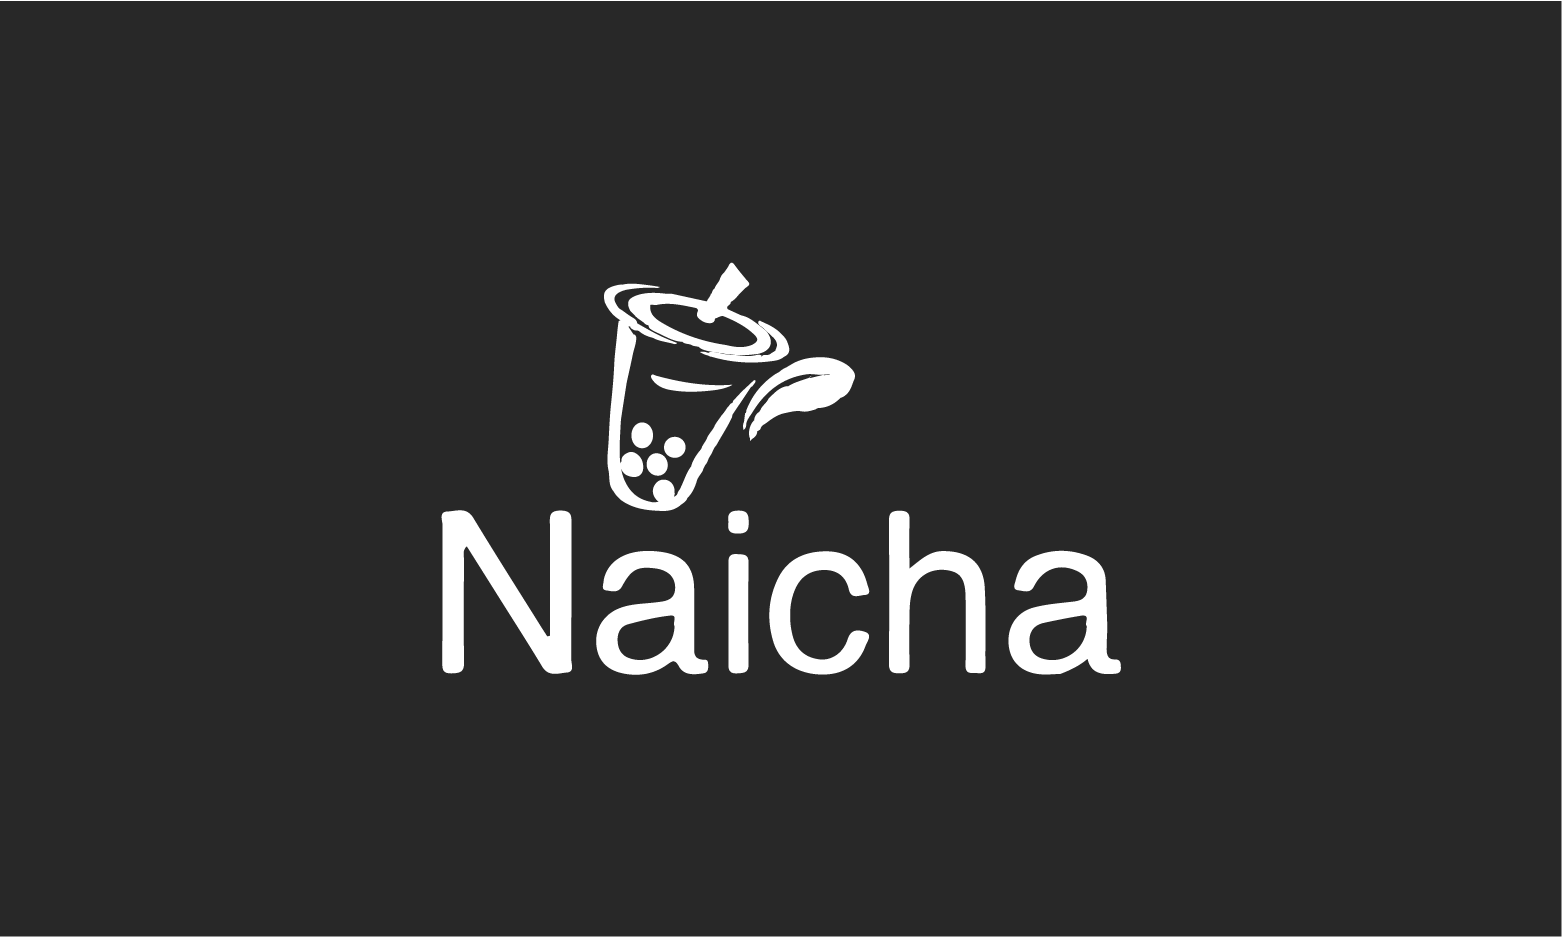 Naicha